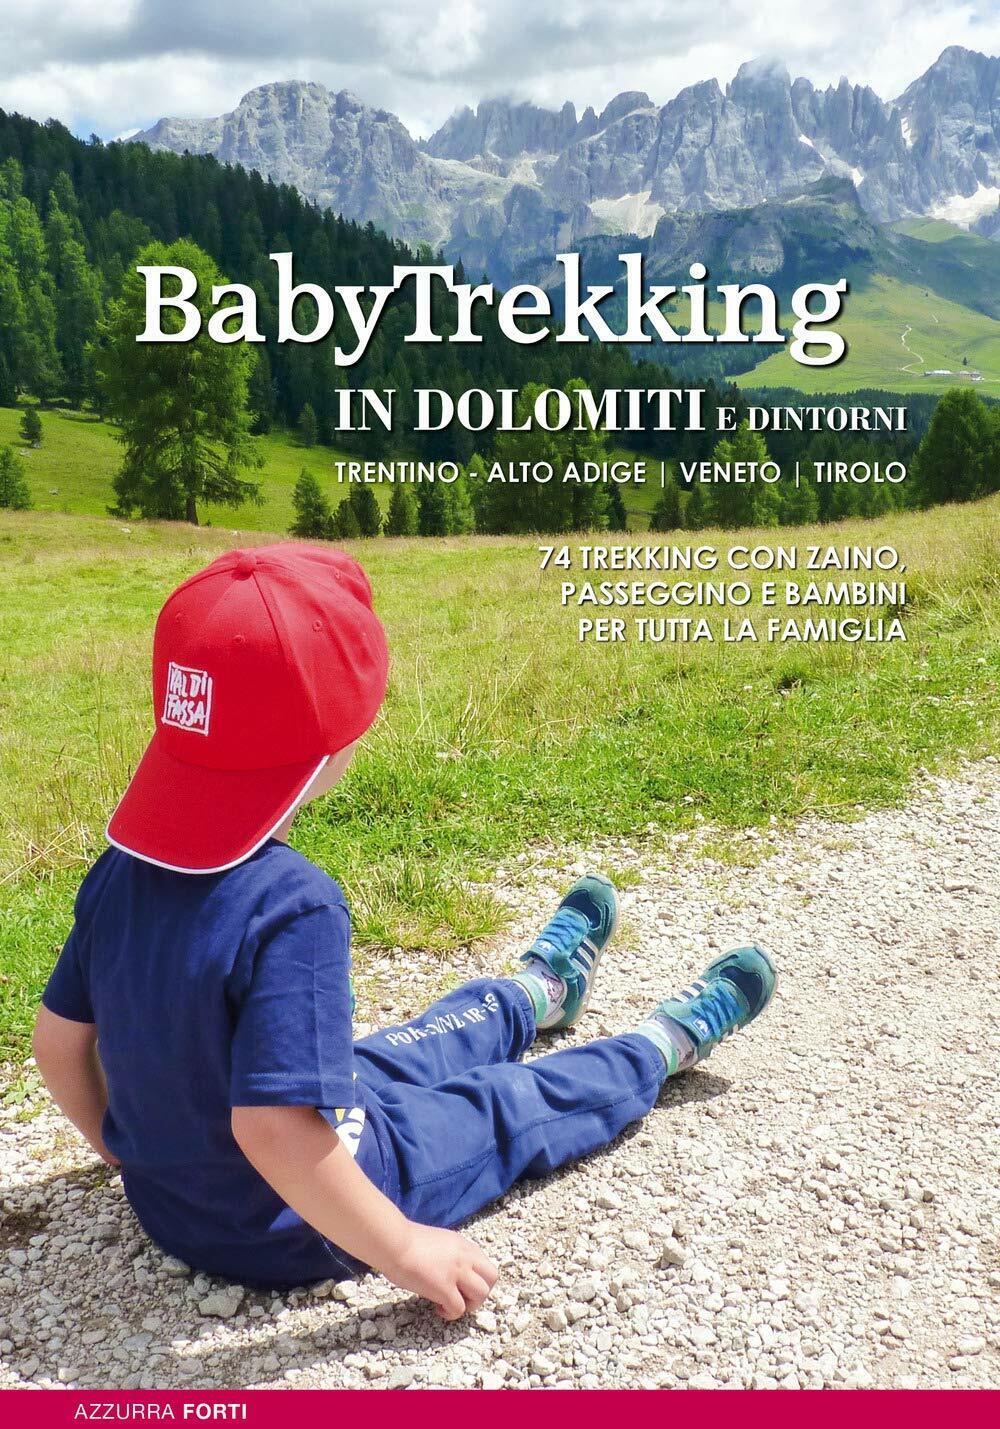 Babytrekking in Dolomiti e dintorni - Azzurra Forti - ViviDolomiti, 2019